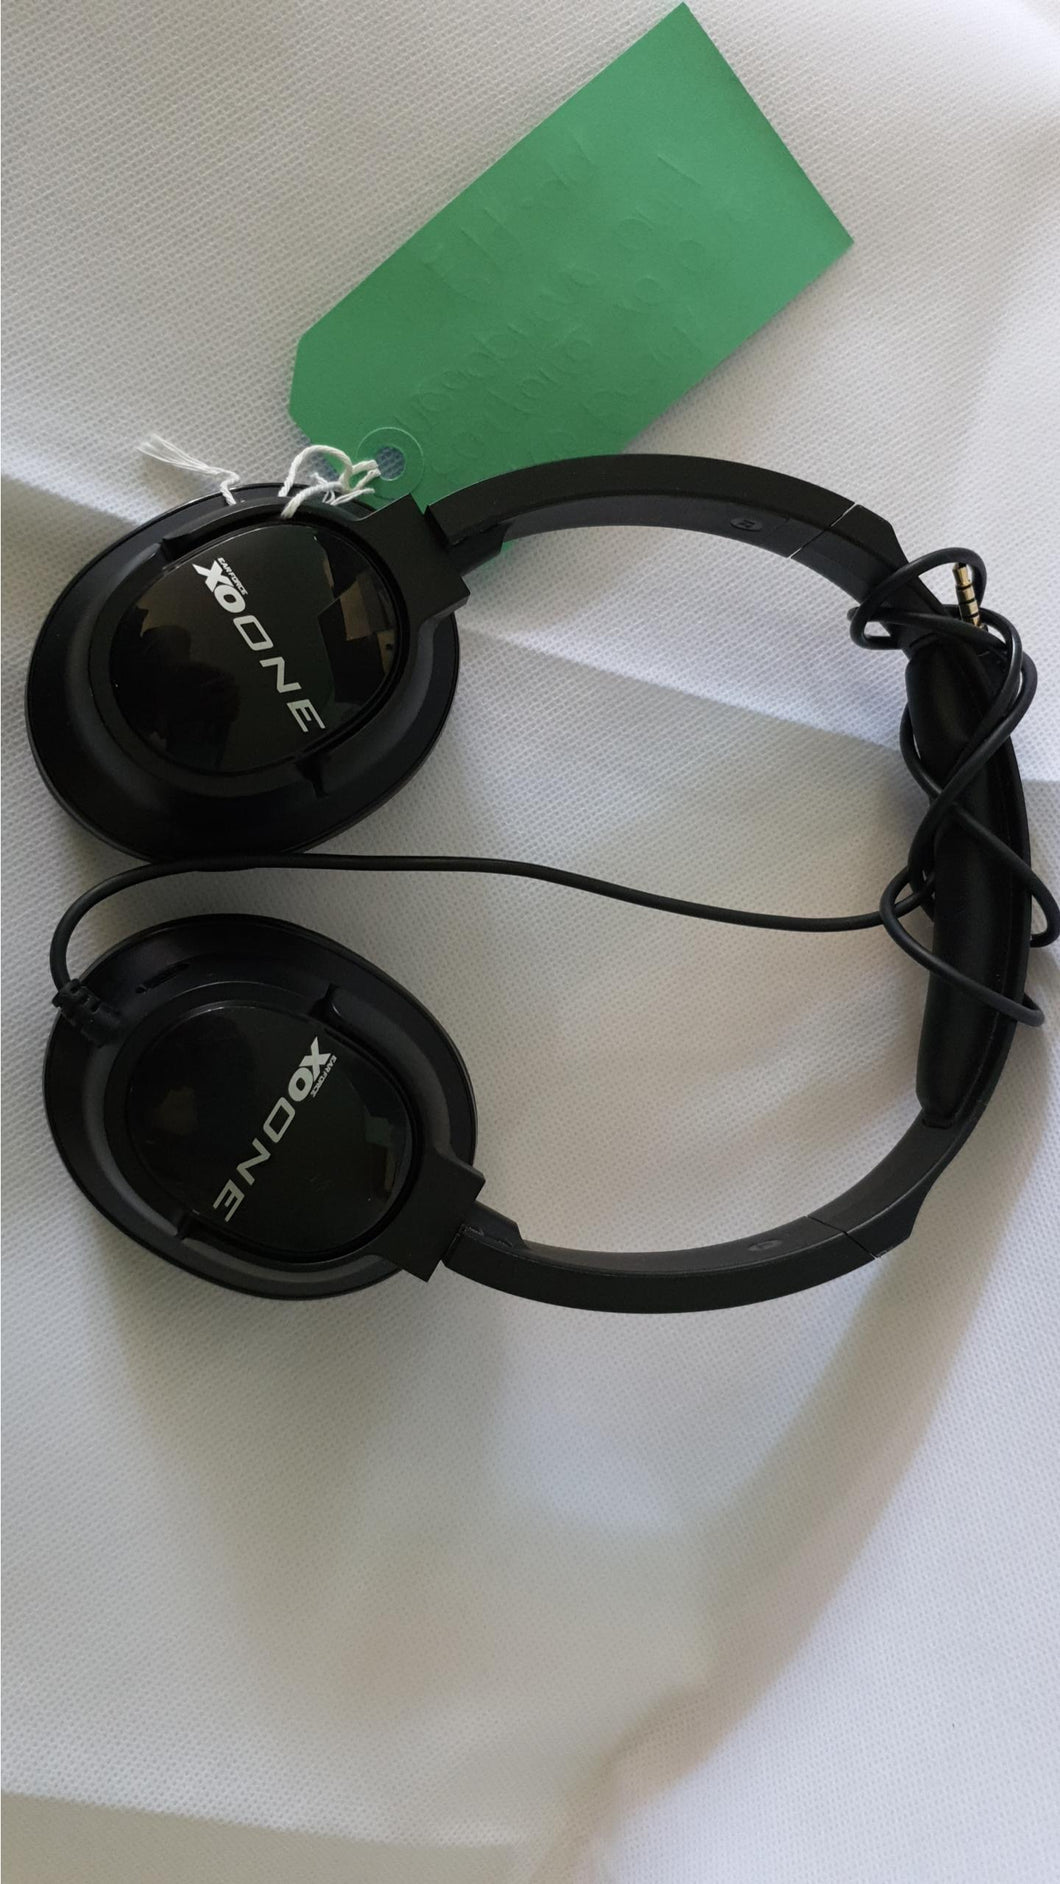 Turtle Beach Earforce XO One Headphones. Do not work with mic ideal as headphones